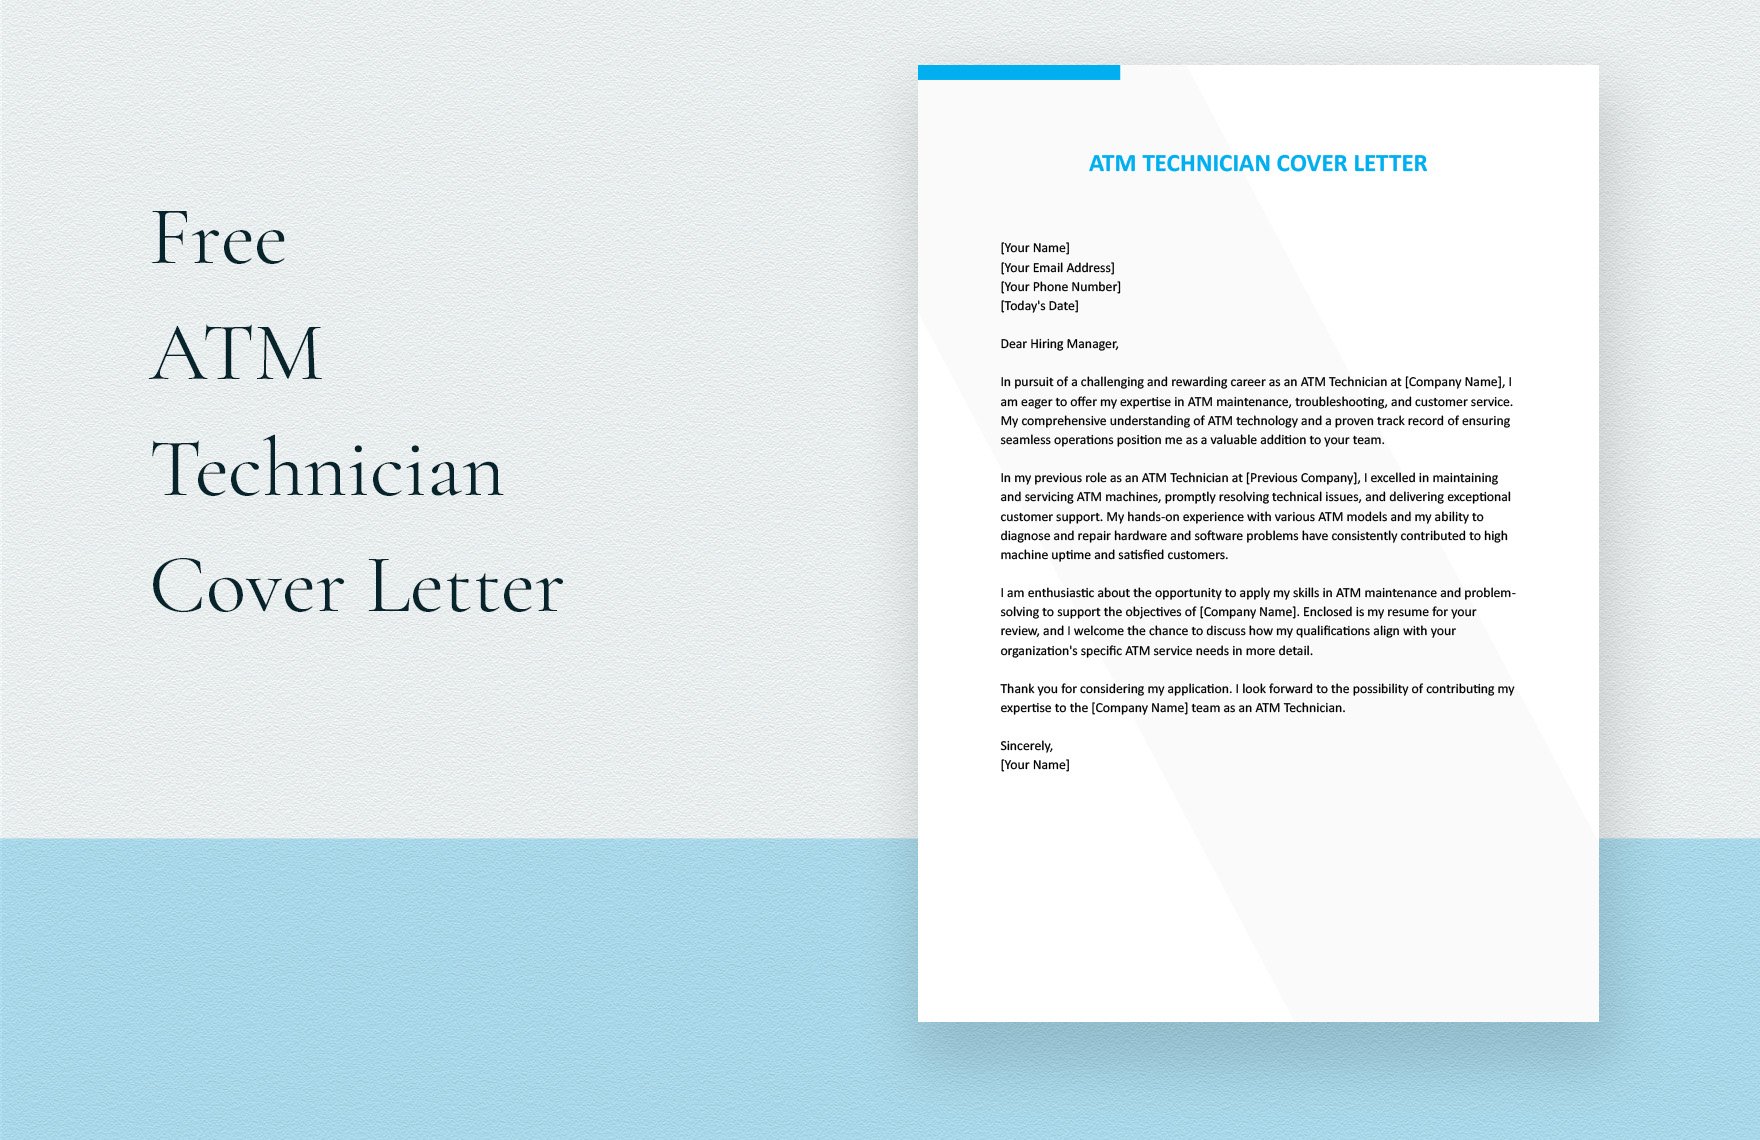 ATM Technician Cover Letter